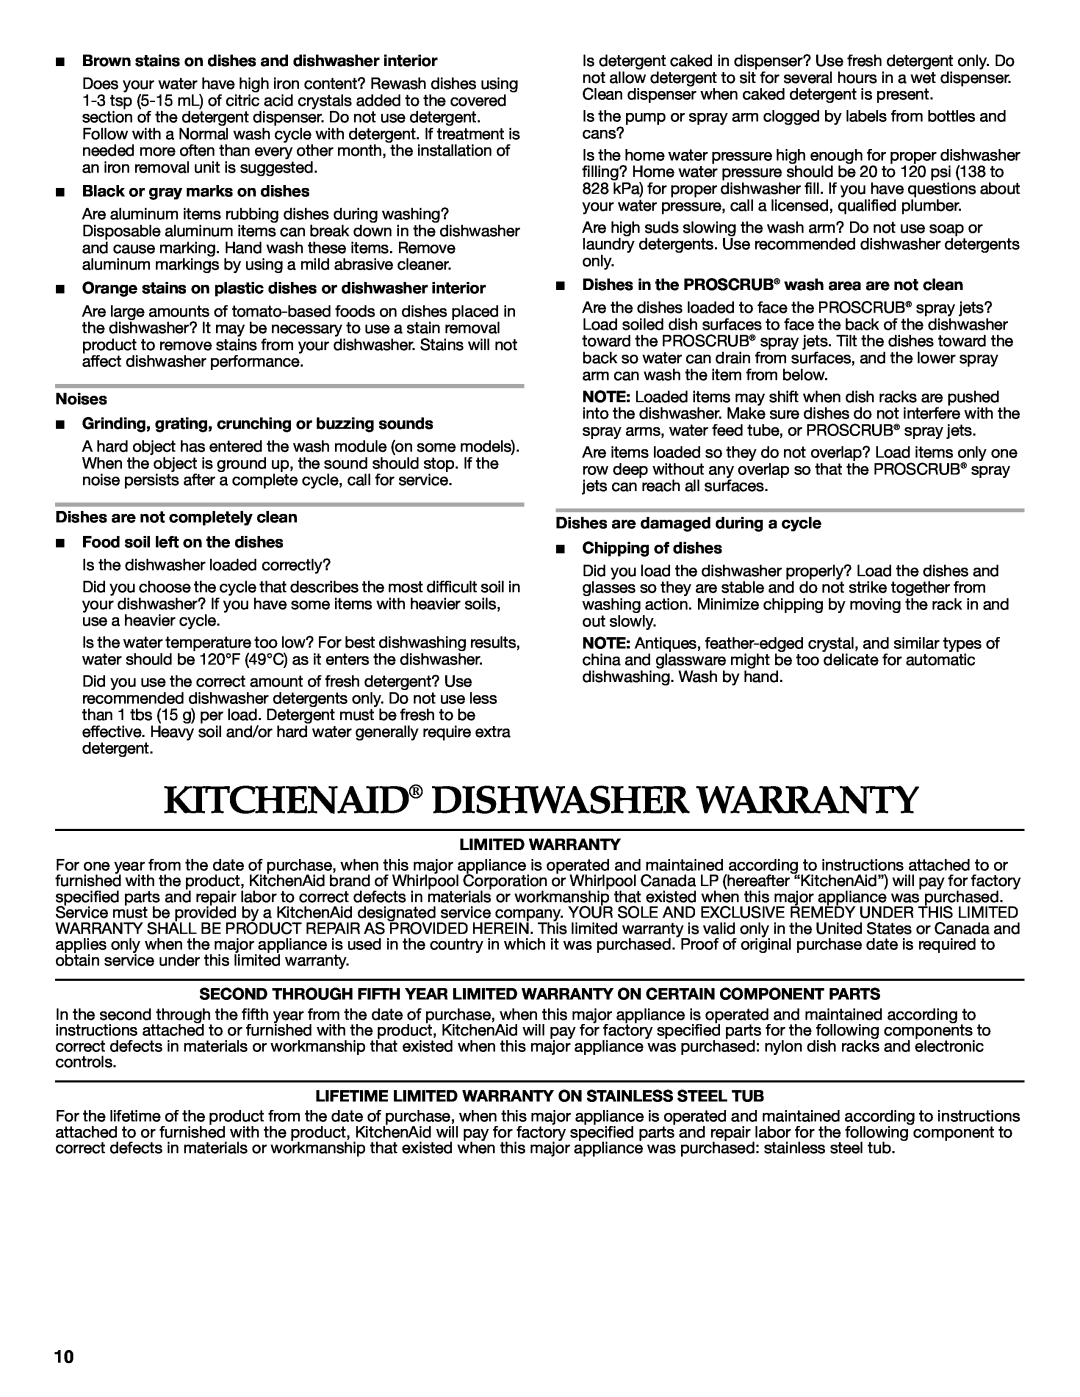 KitchenAid KUDE03FTSS Kitchenaid Dishwasher Warranty, Brown stains on dishes and dishwasher interior, Limited Warranty 